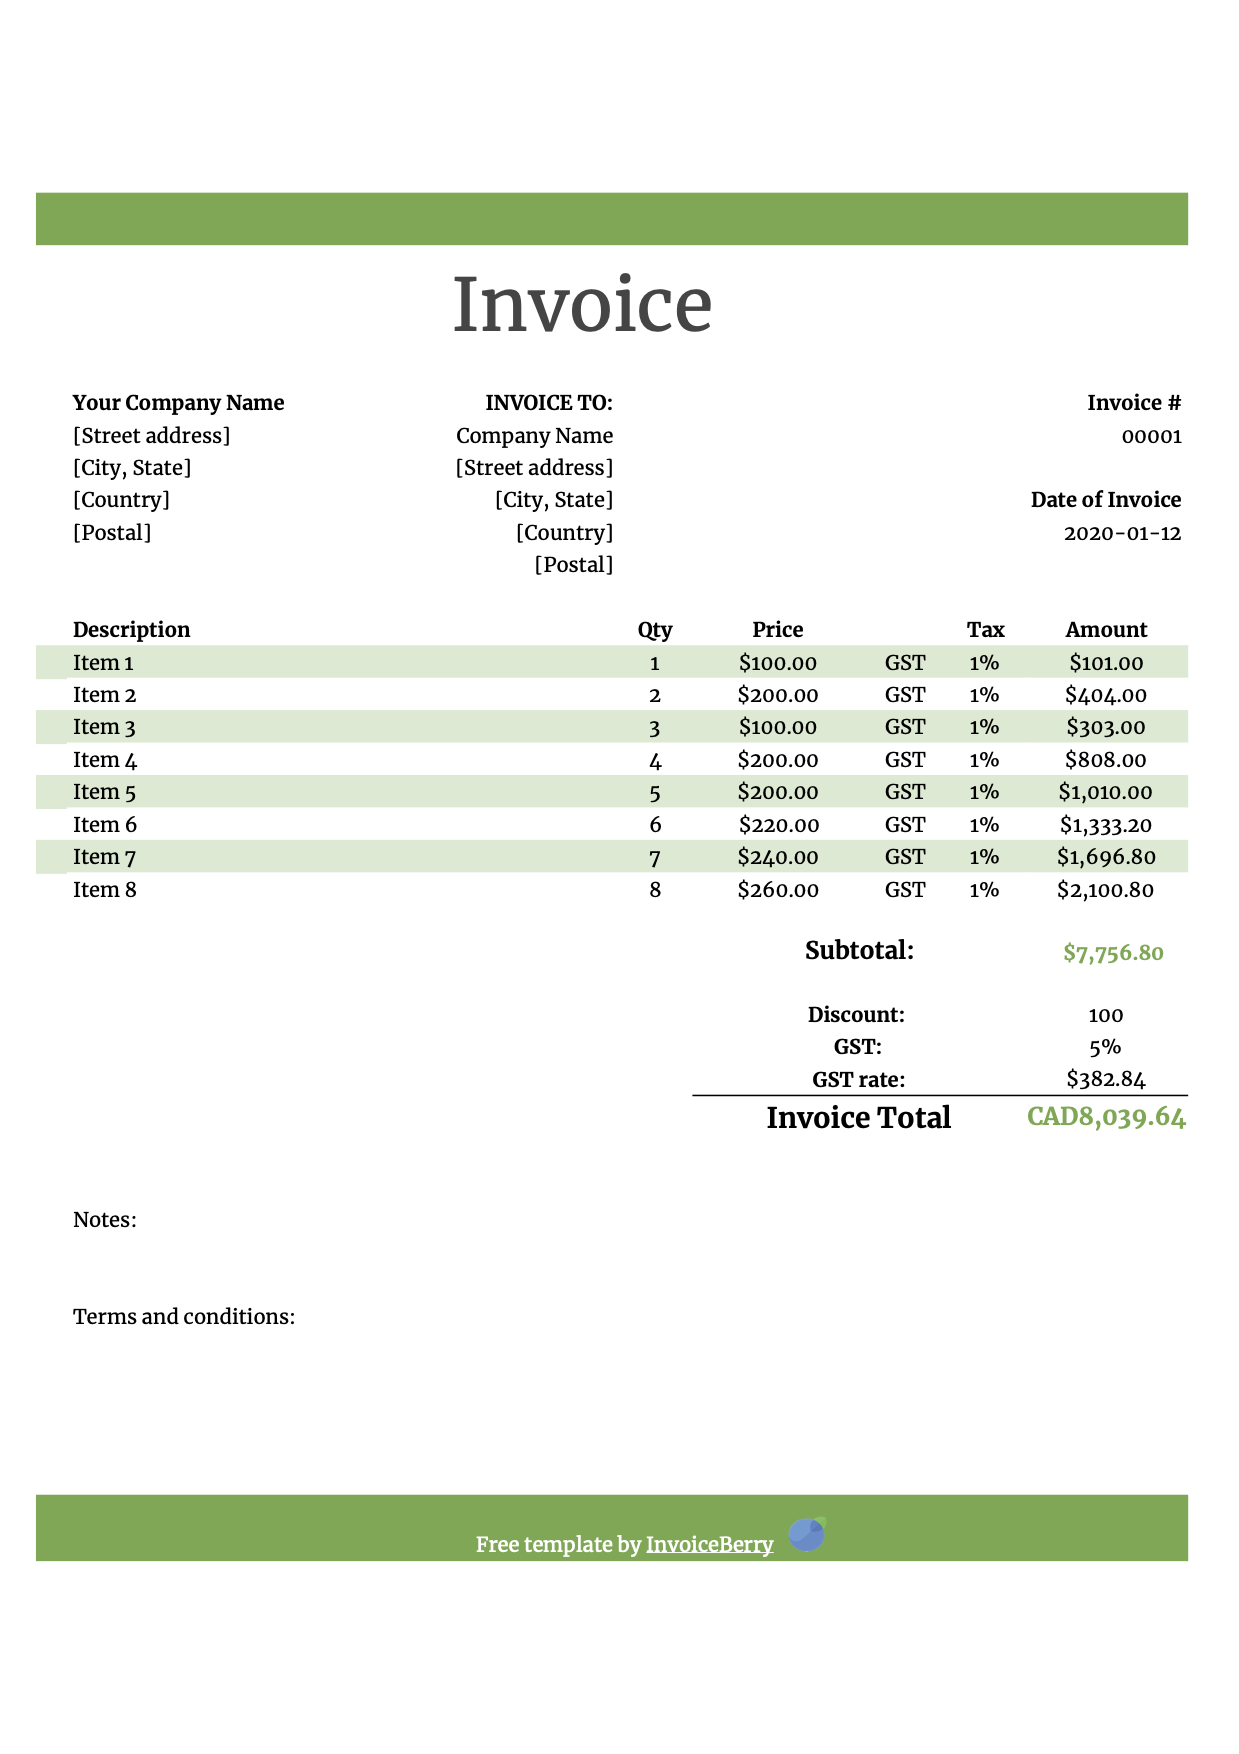 Google Sheet Invoice Template (2)